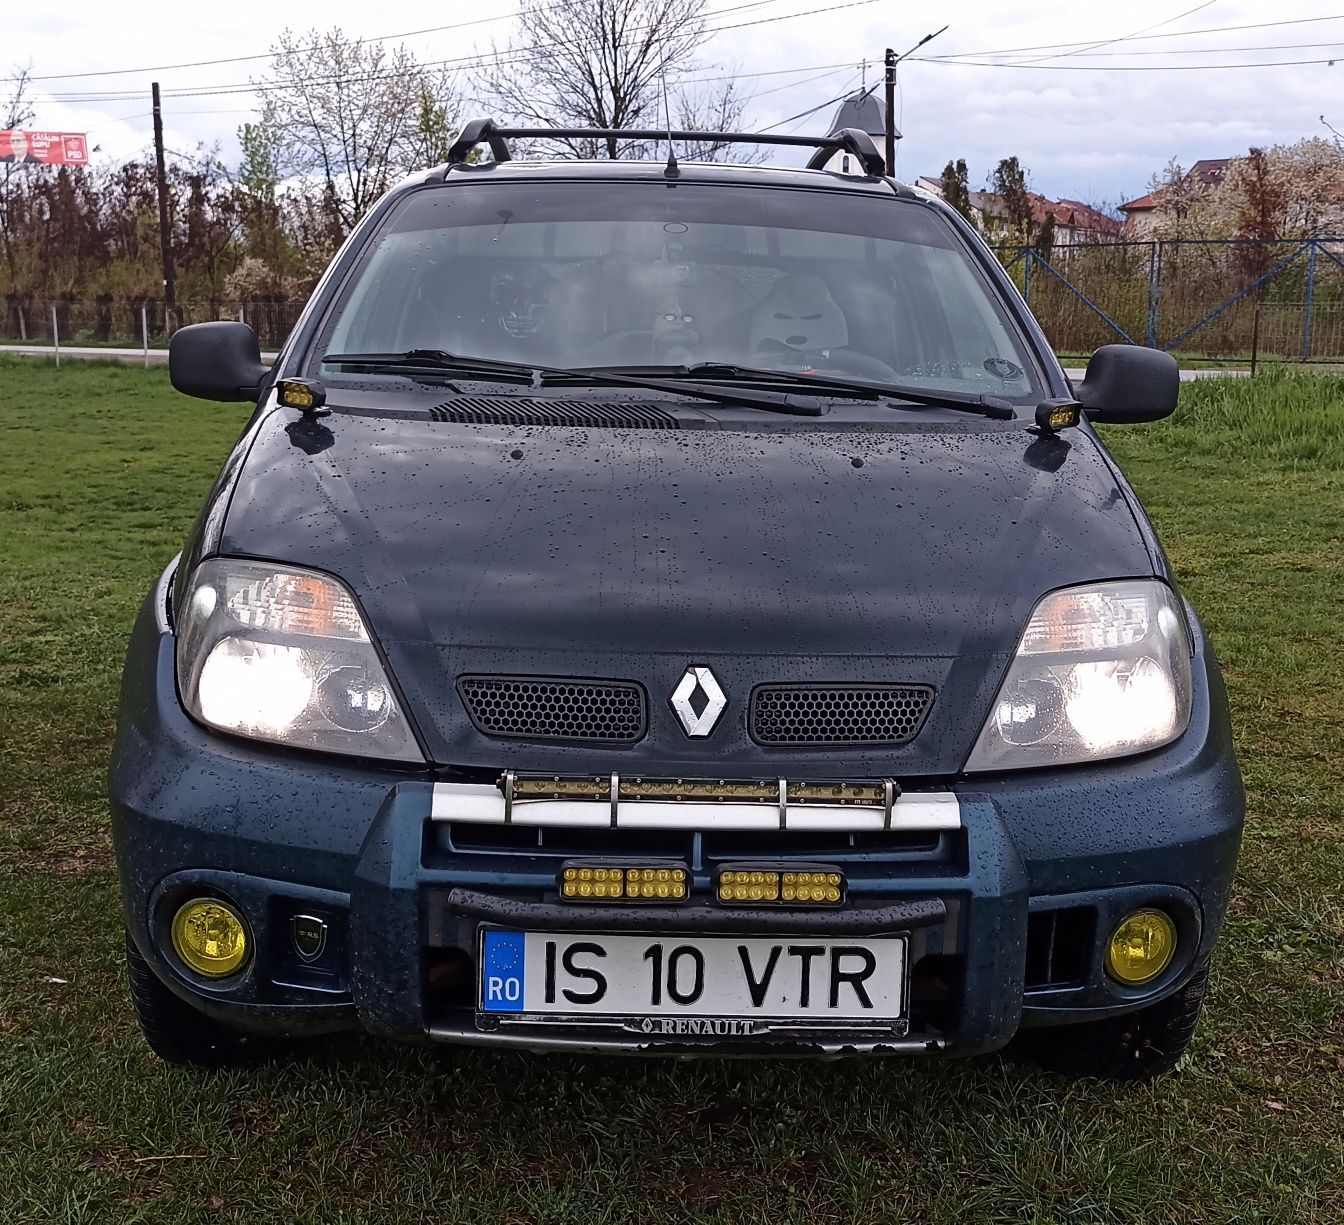 Renault Megane Scenic RX4 - EURO 3, 2003, 1.9 dCi, 4x4 permanent